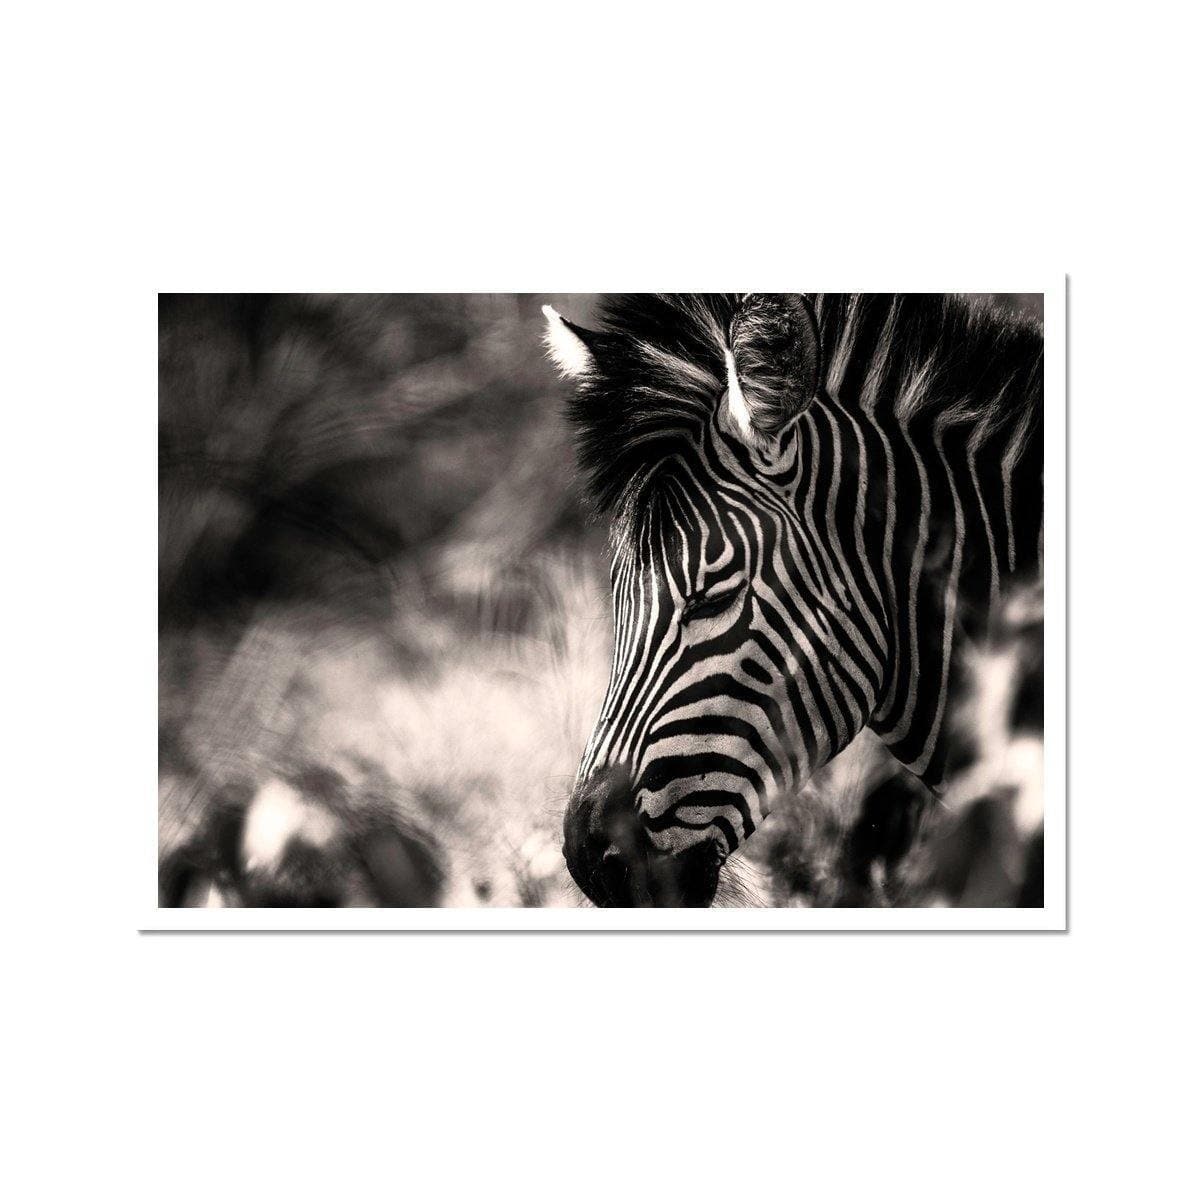 Zebra Dreams - Sean Lee-Davies Sean Lee Davies